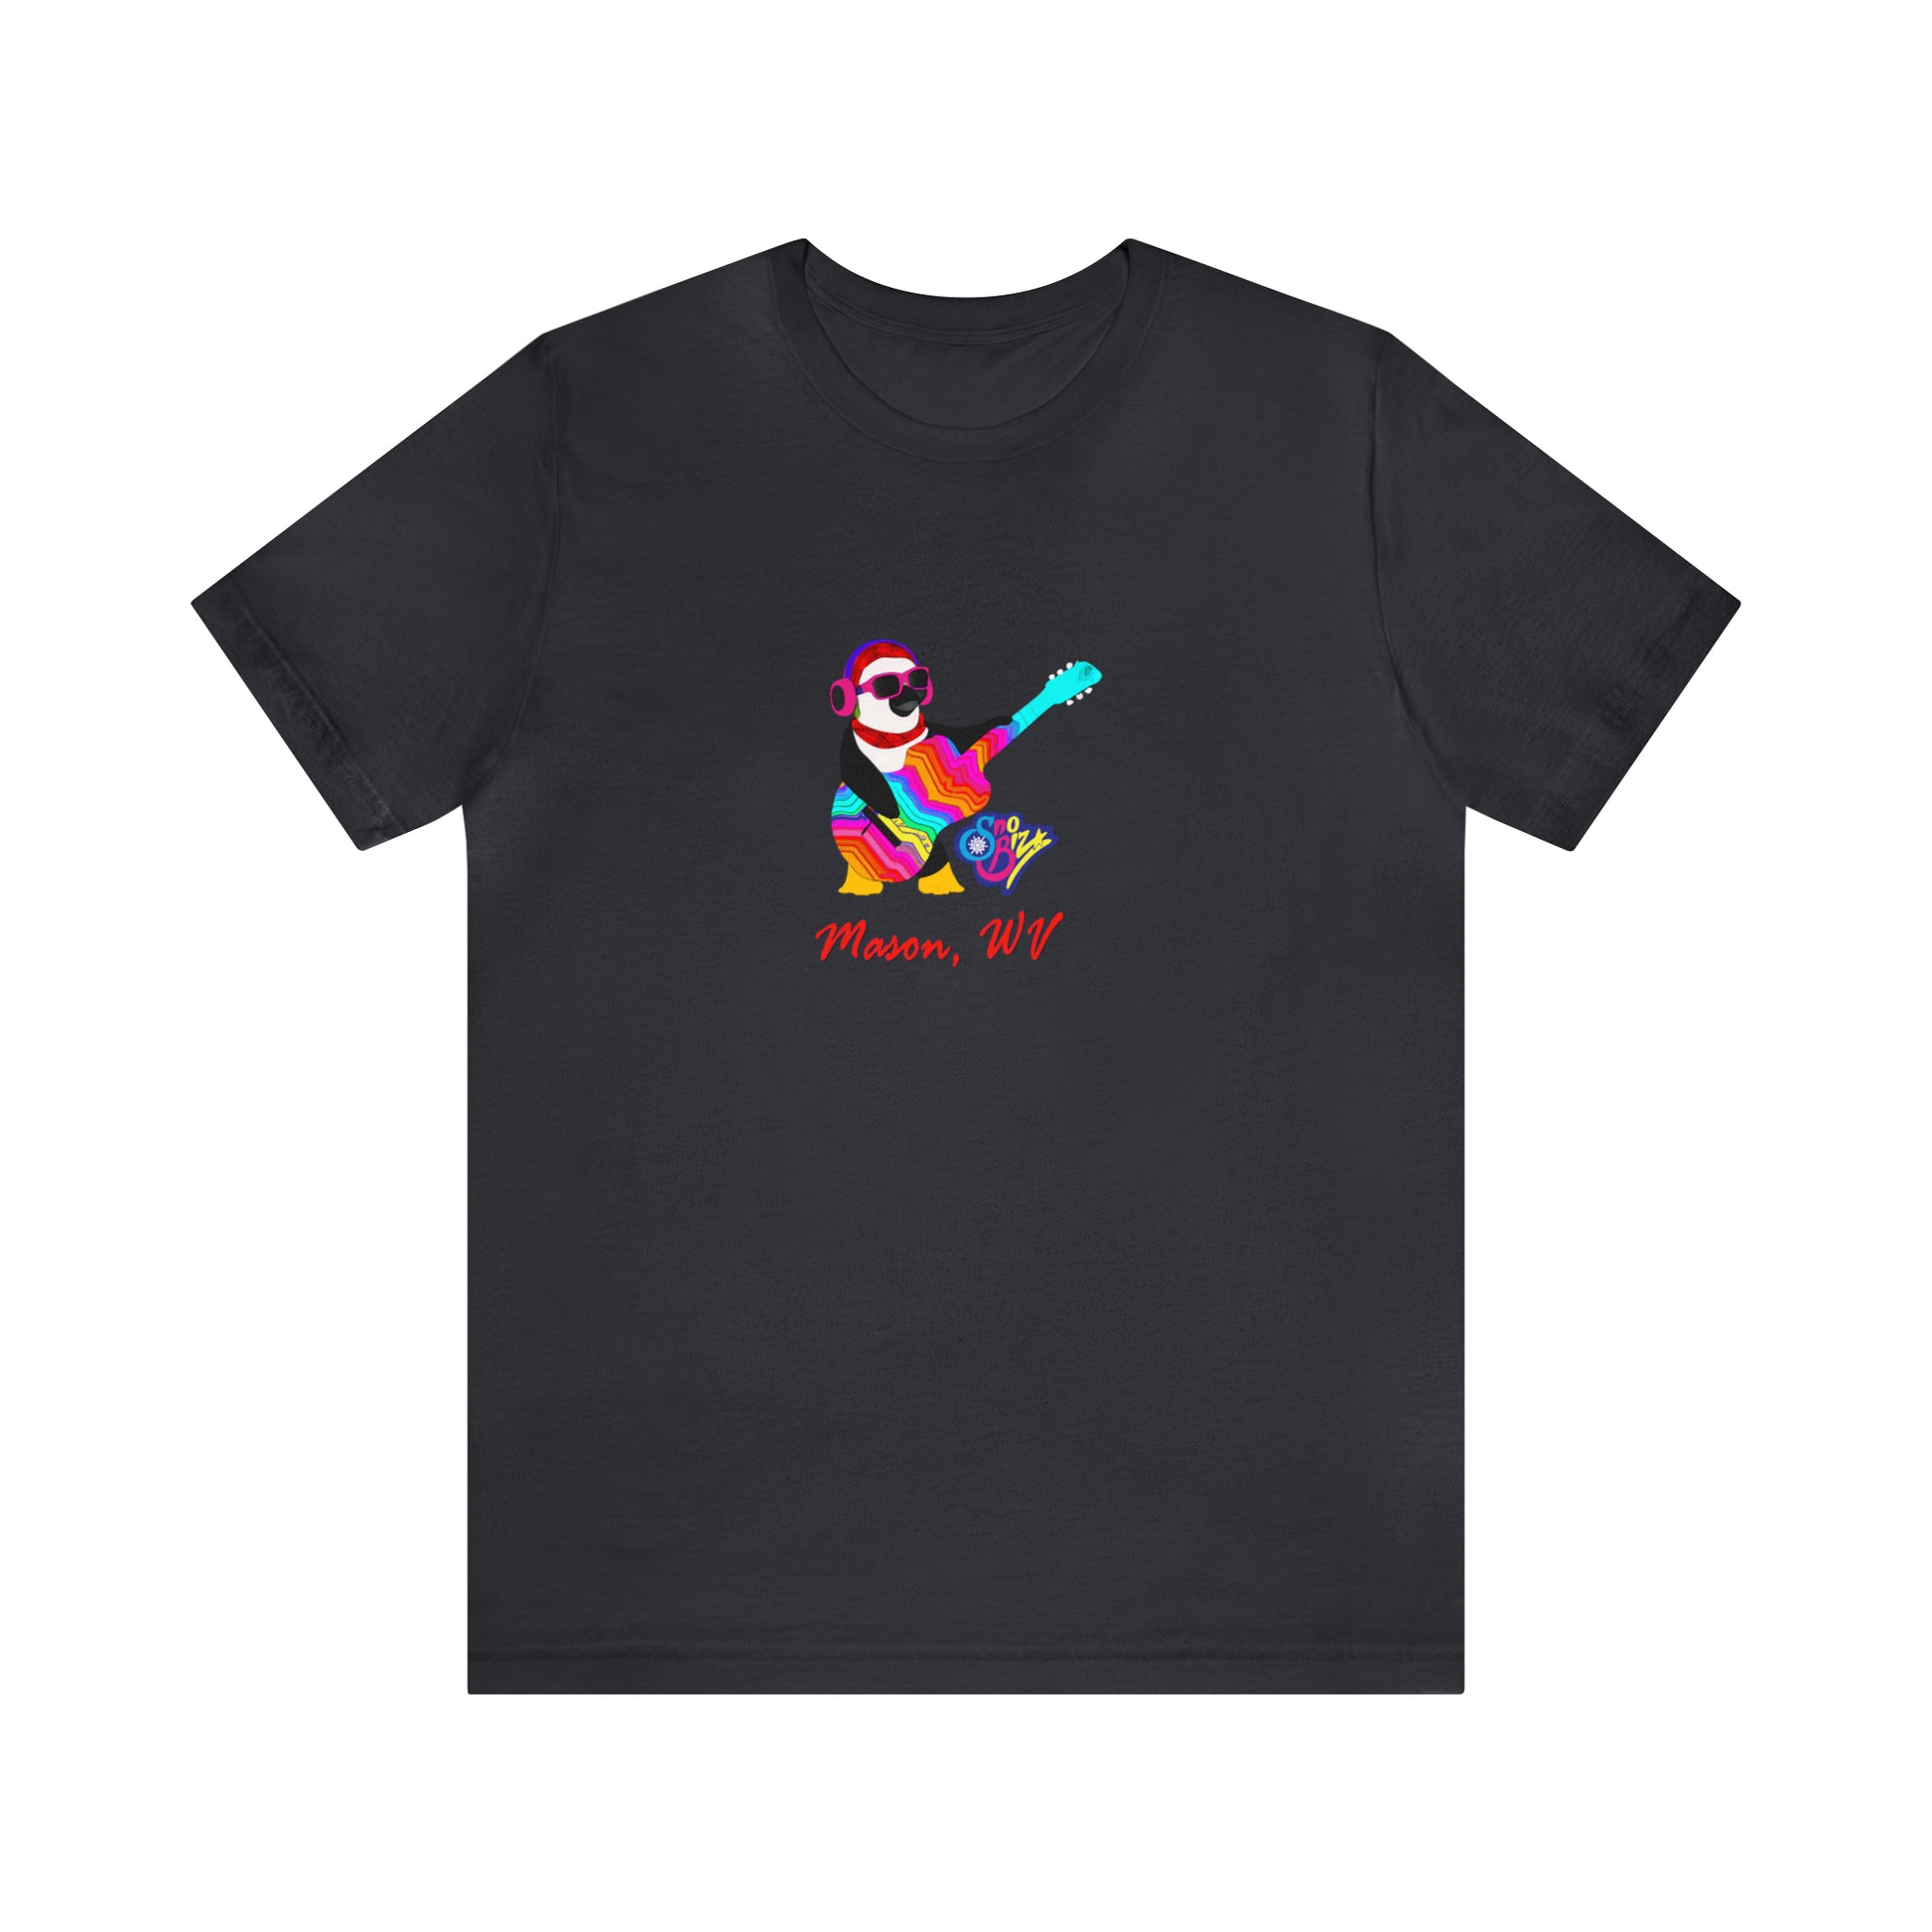 psychedelicBRANDz's Sno Biz Mason: Psychedelic Snow Swirl Tee design on a dark grey shirt